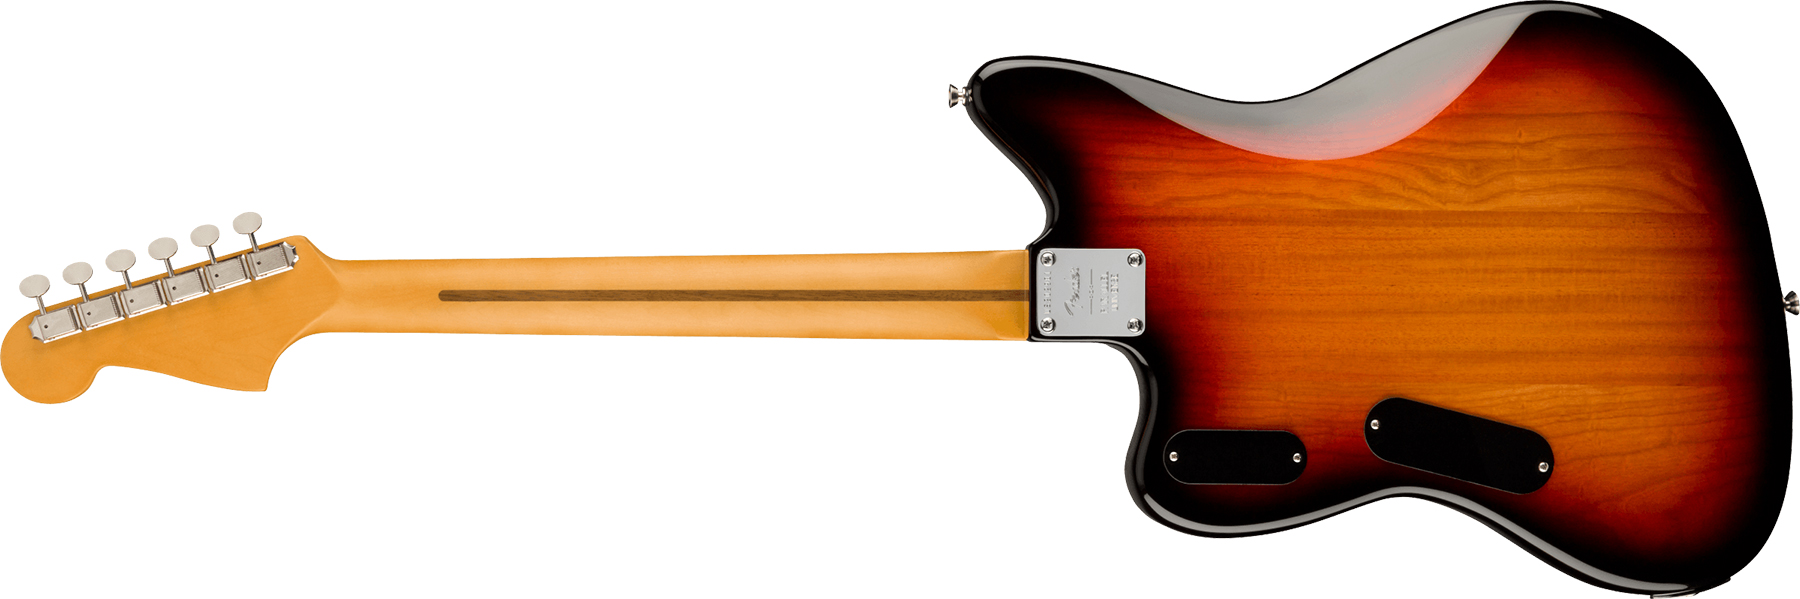 Fender Jazzmaster Spark-o-matic Volume Ii Parallel Universe Hhh Trem Rw - 3-color Sunburst - Retro rock electric guitar - Variation 1